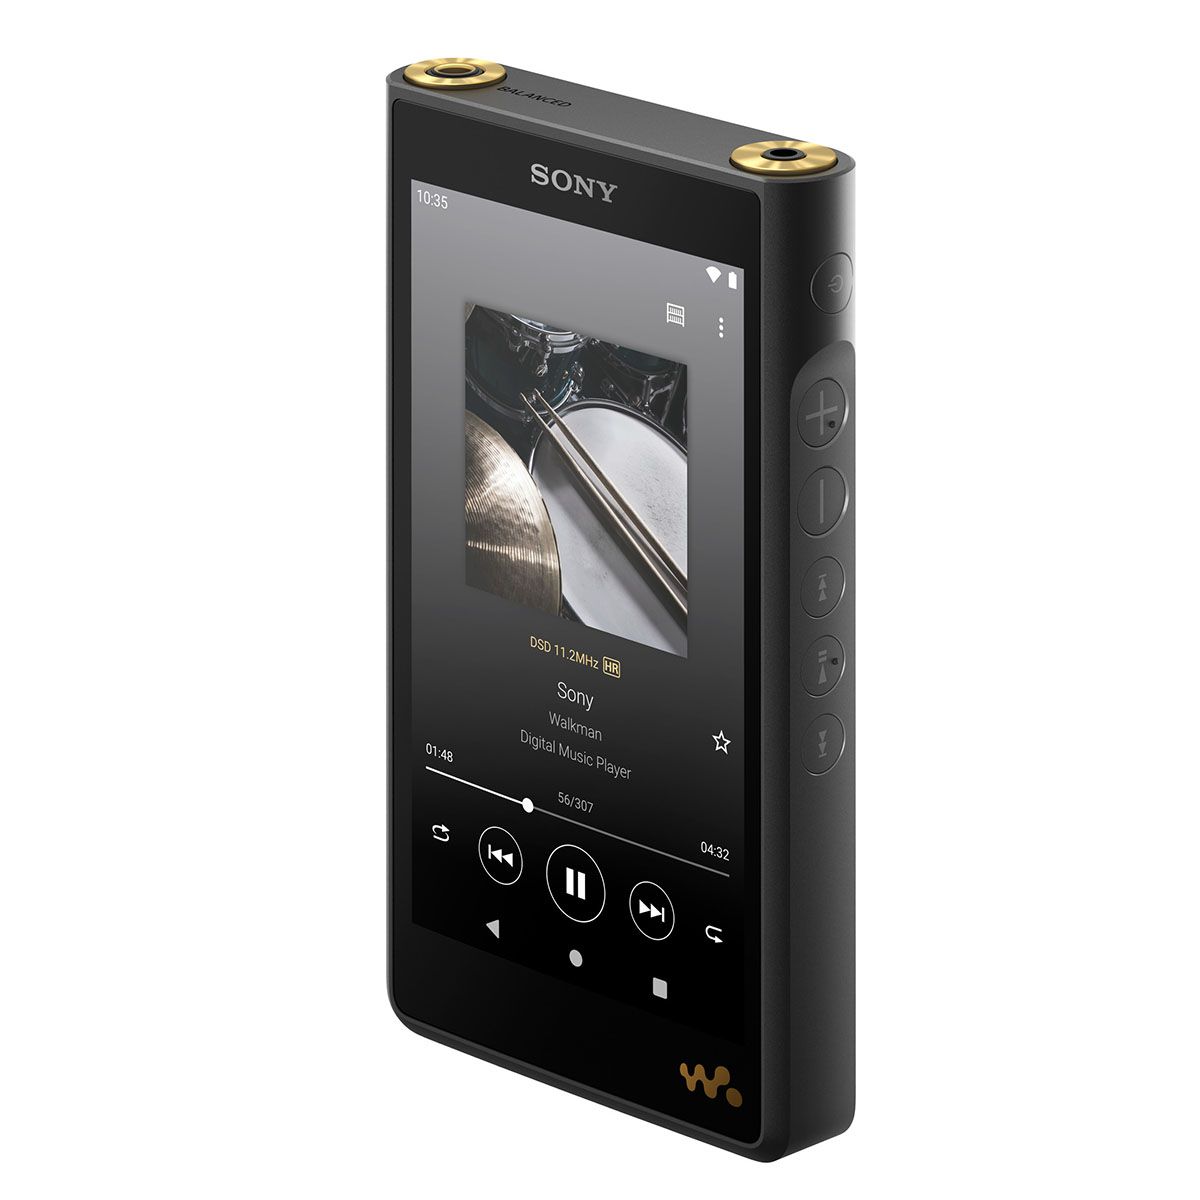 Sony WM1AM2 Walkman Digital Music Player - angled front view with album art